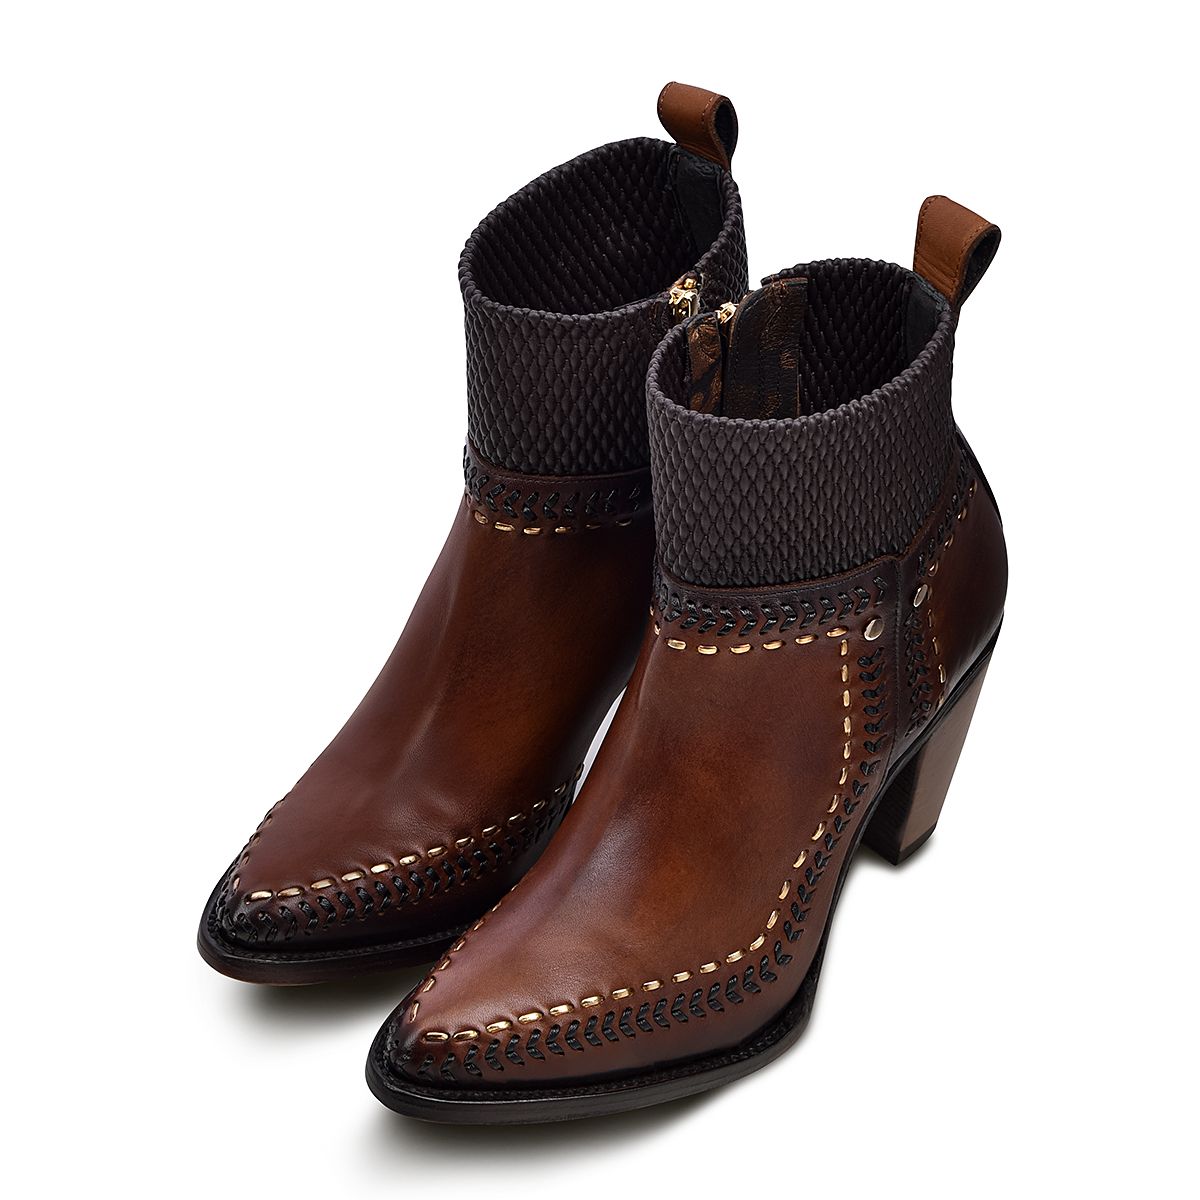 3F81RS - Cuadra mocha western fashion leather ankle boots for women-CUADRA-Kuet-Cuadra-Boots